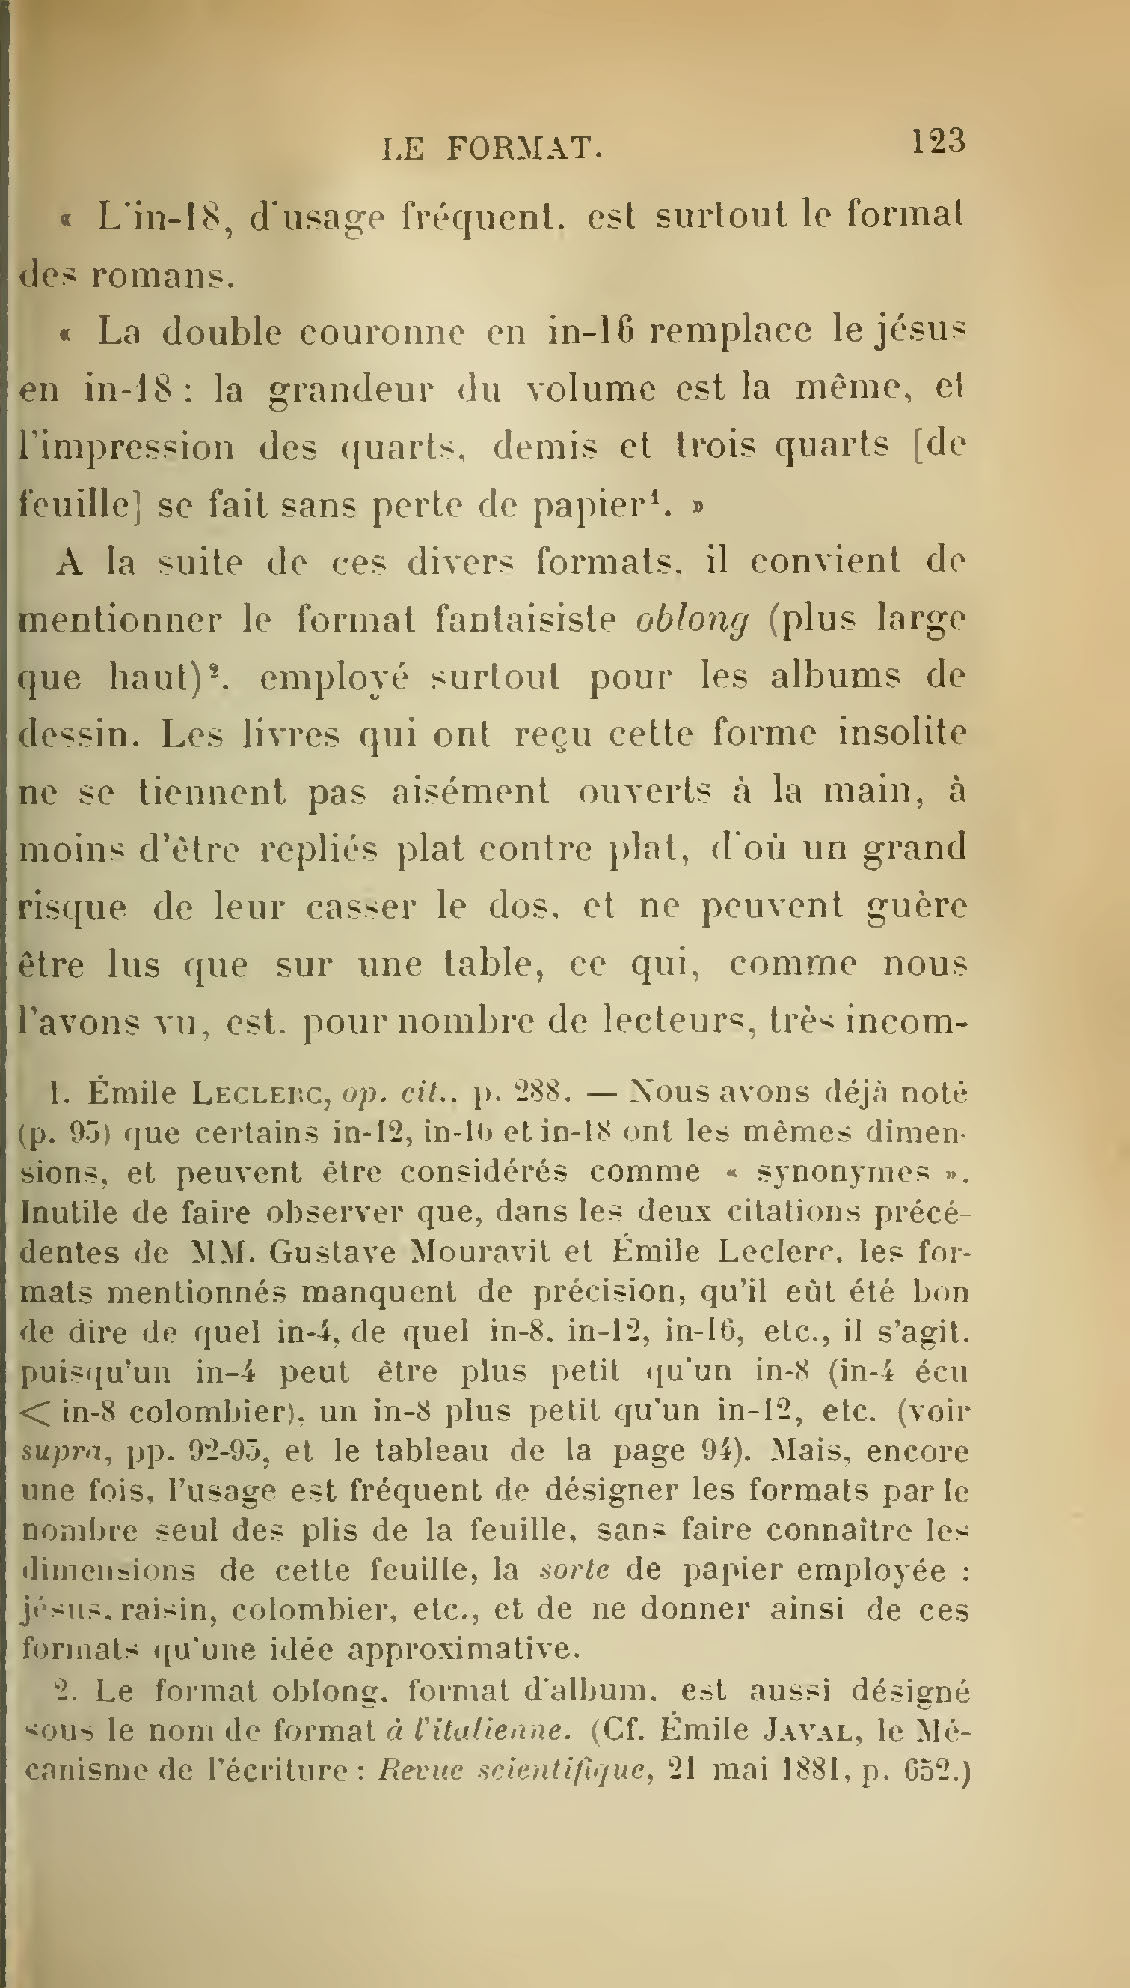 Albert Cim, Le Livre, t. III, p. 123.